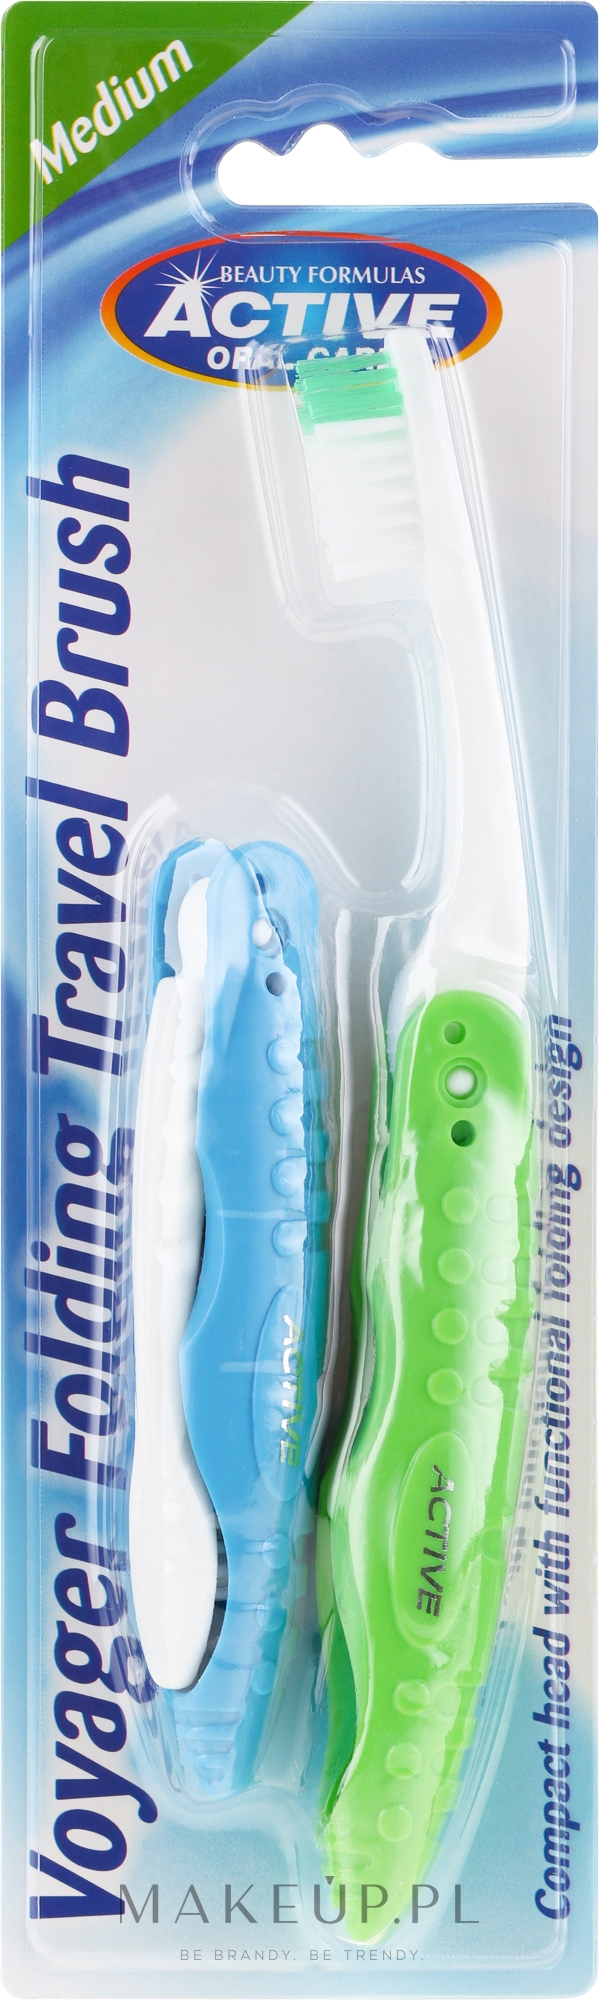 Podróżna szczoteczka do zębów, zielona - Beauty Formulas Voyager Active Folding Dustproof Travel Toothbrush Medium — Zdjęcie 2 szt.